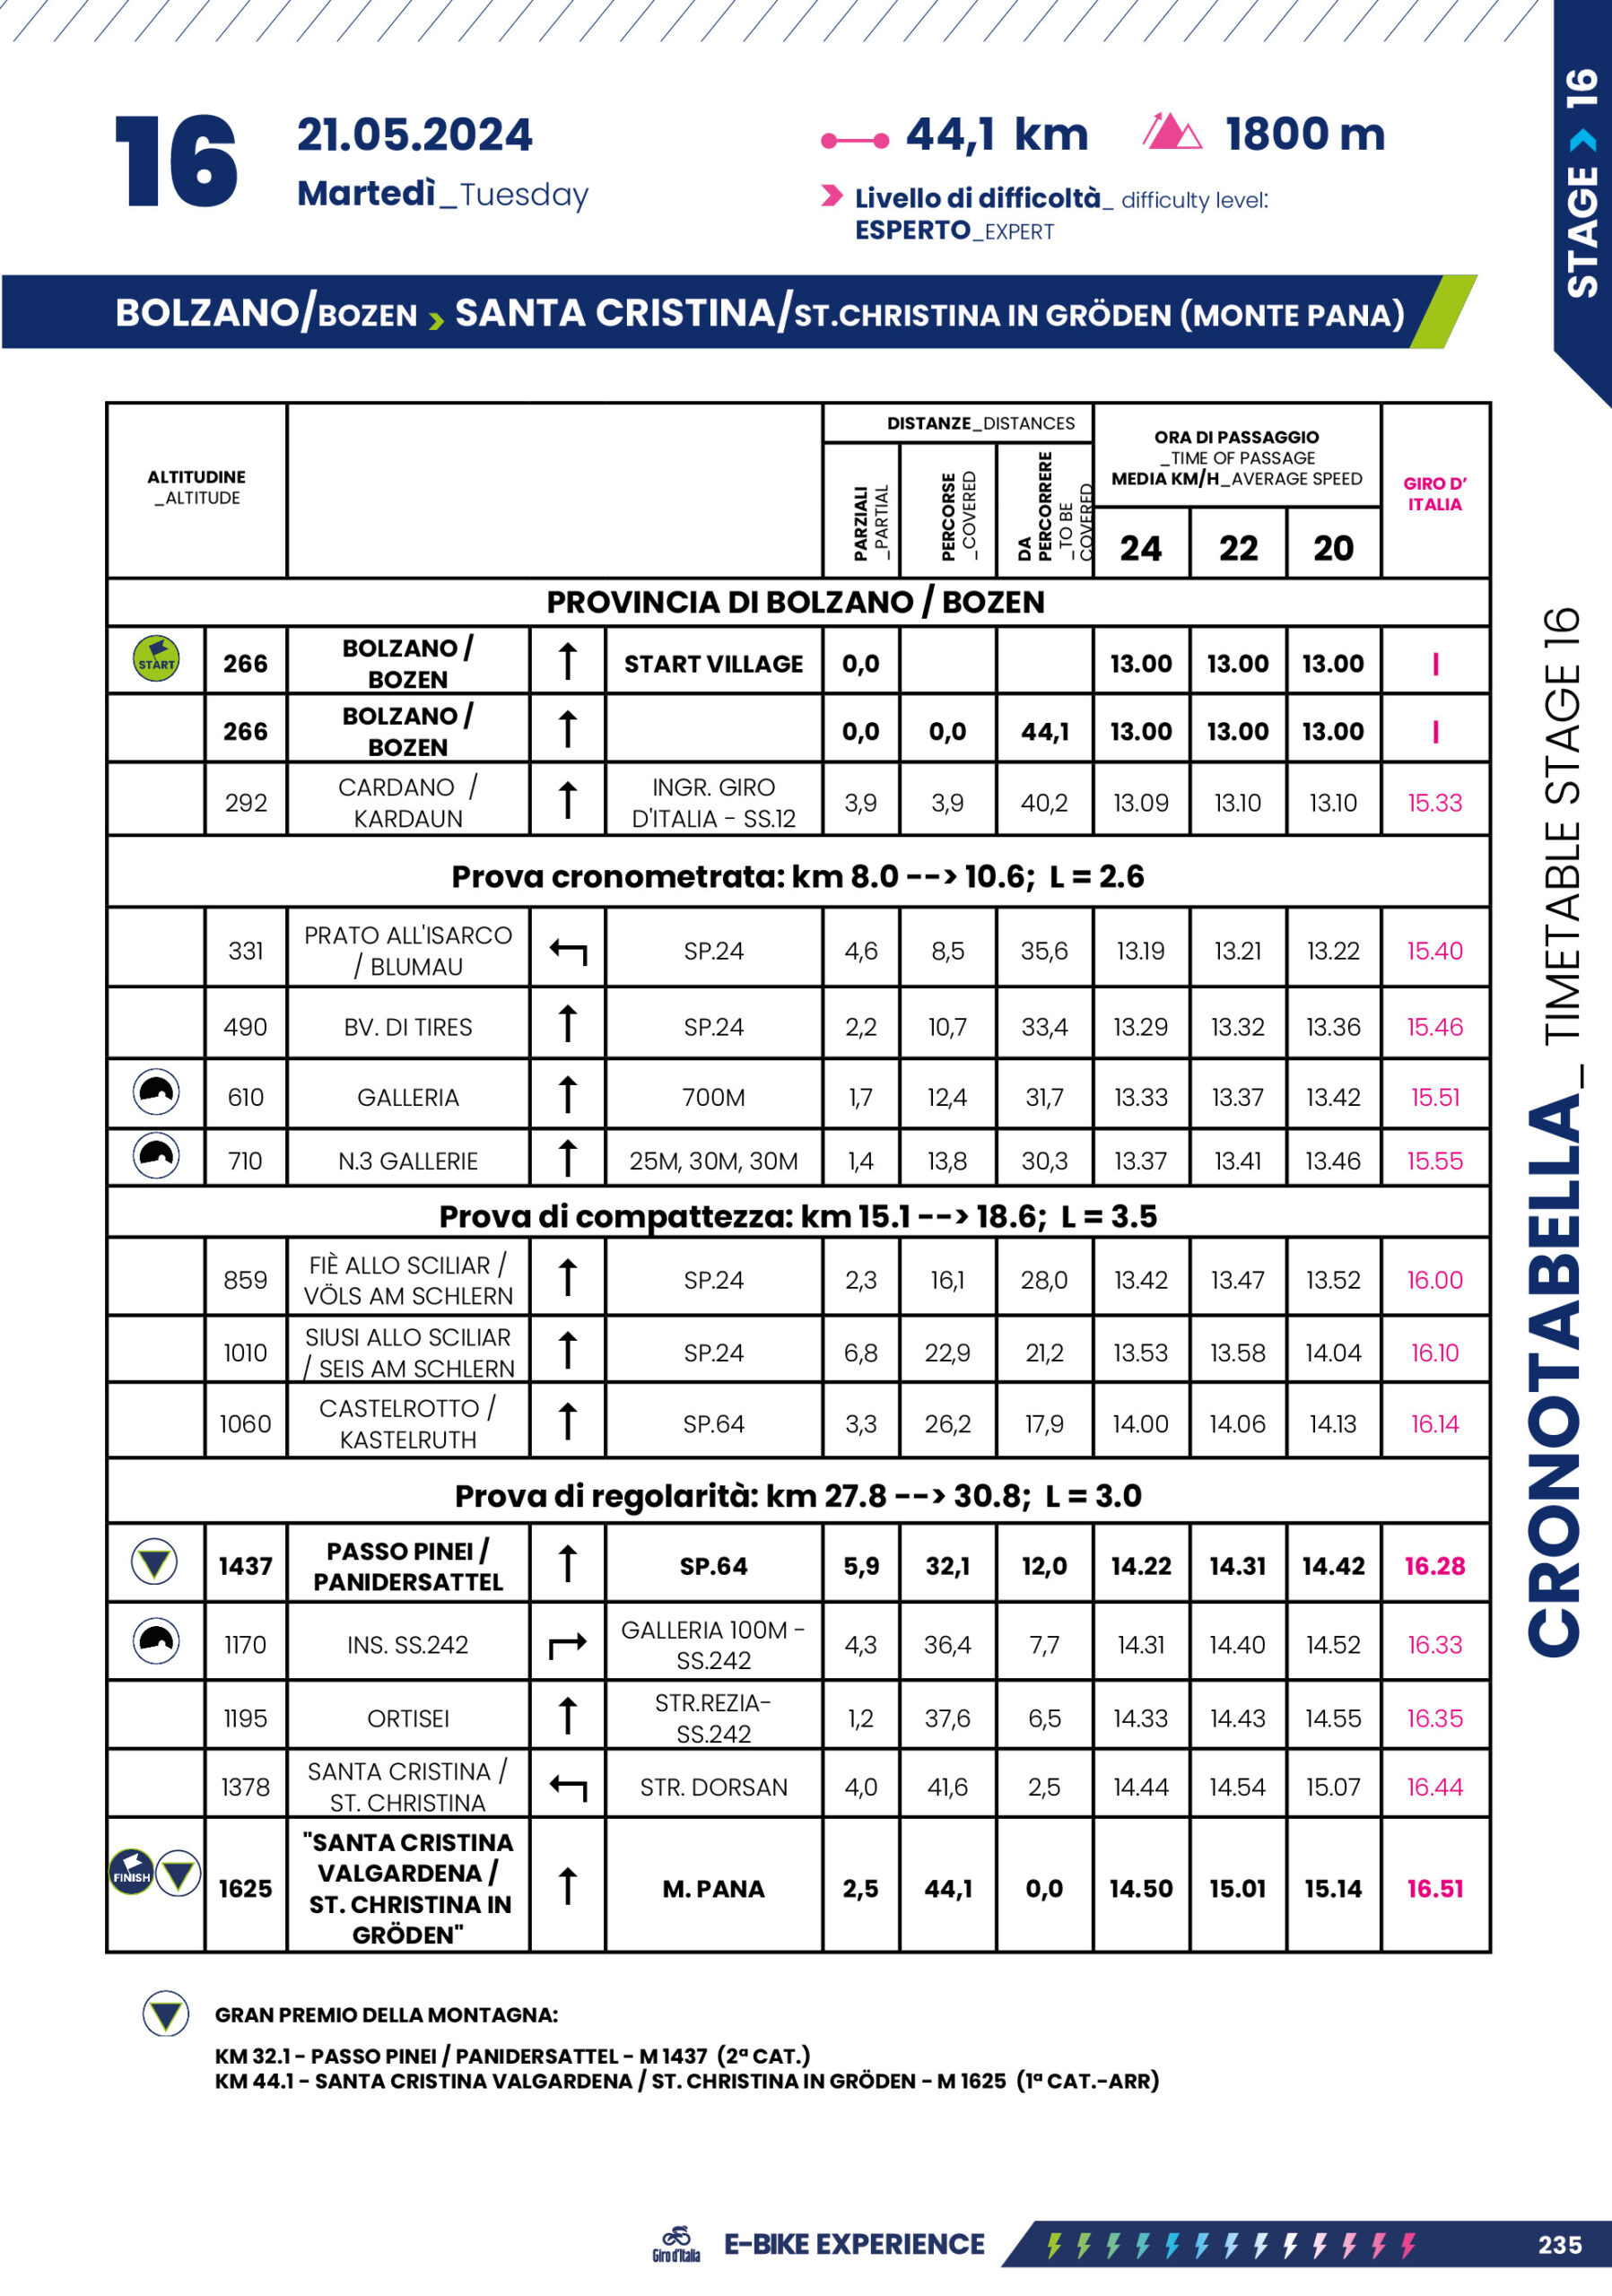 Cronotabella/Itinerary Timetable Tappa 16 Giro-E 2024